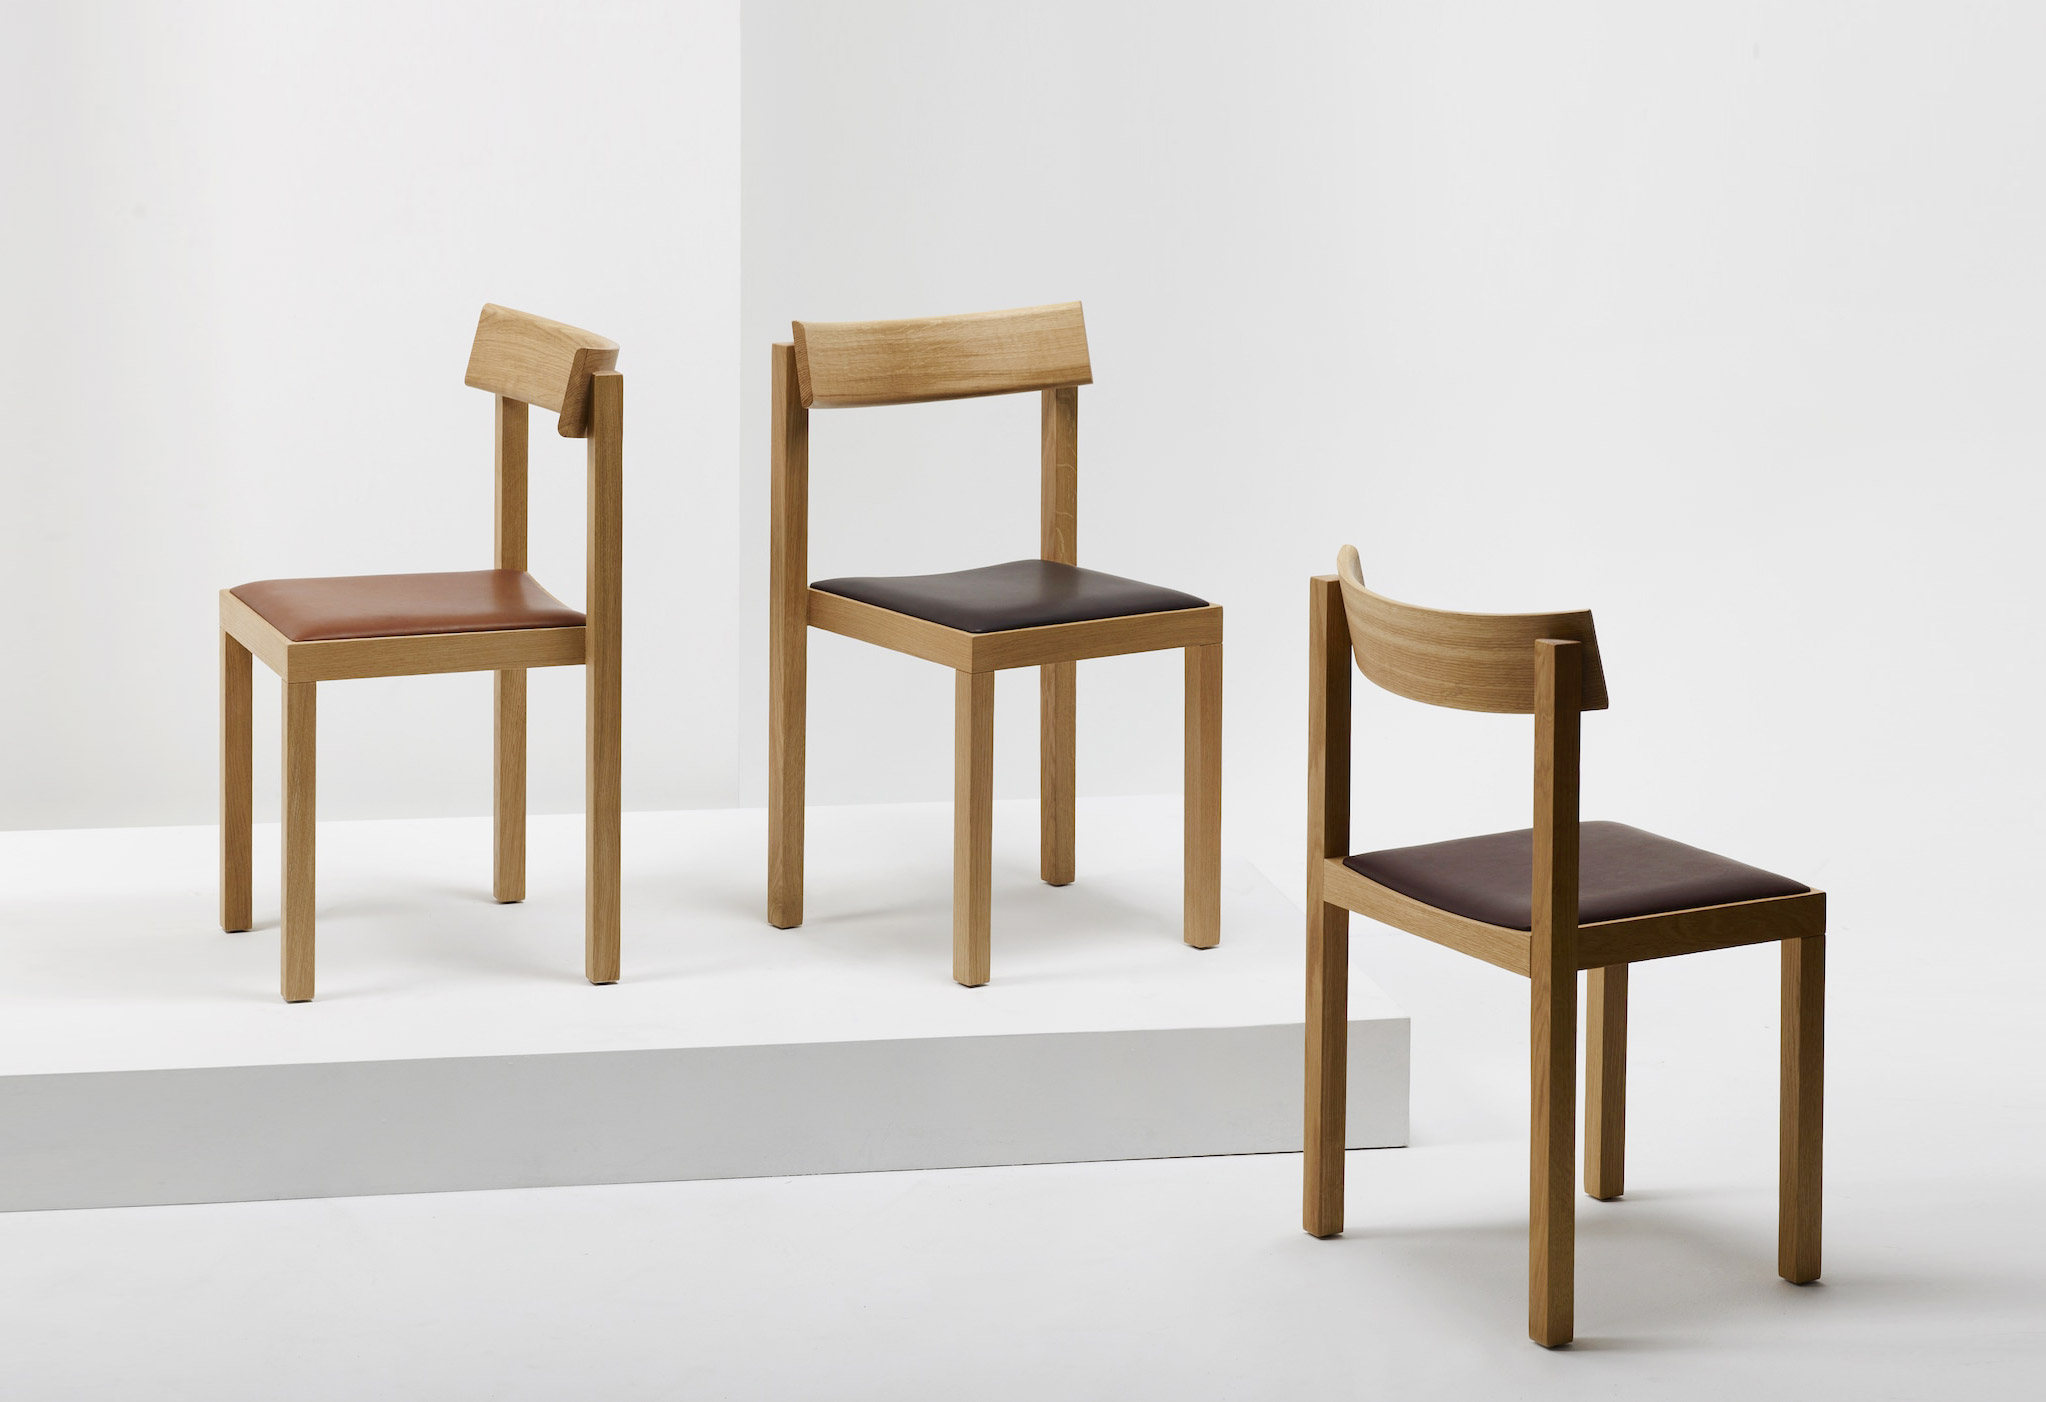 Minimalist Chair by Konstantin Grcic | Aesence